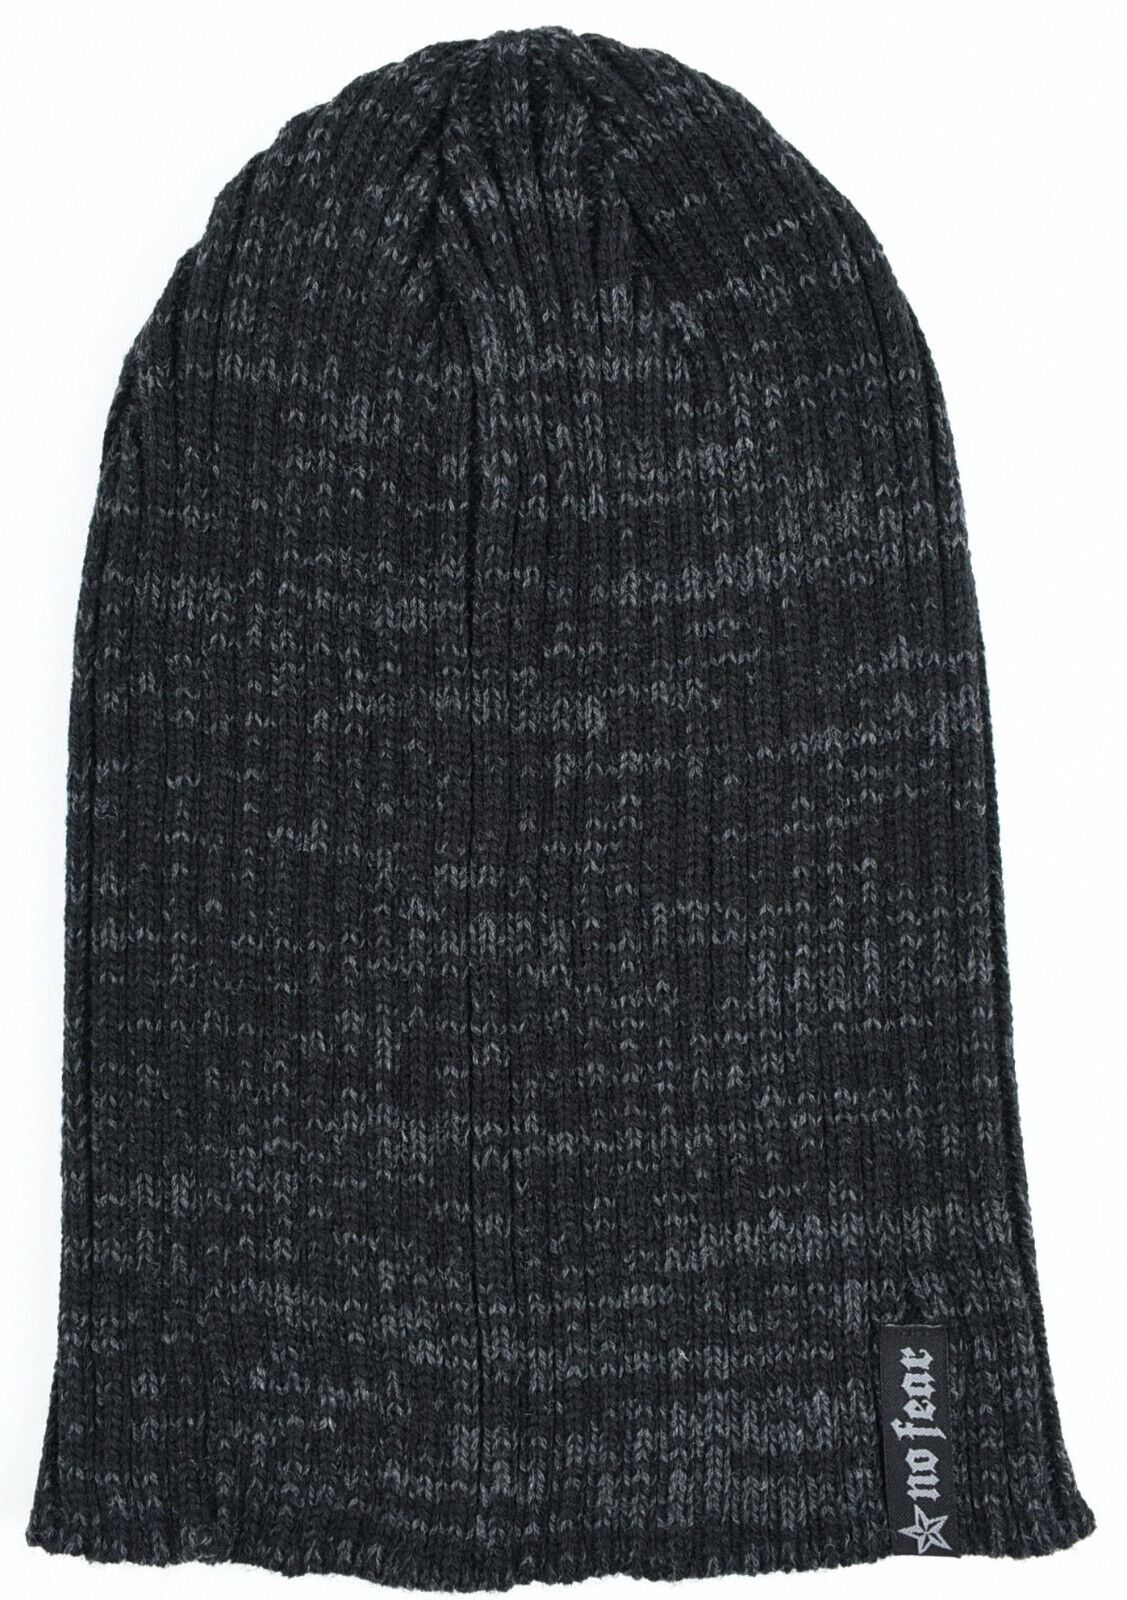 NO FEAR Men's Slouch Beanie Hat, Black/Grey, One Size